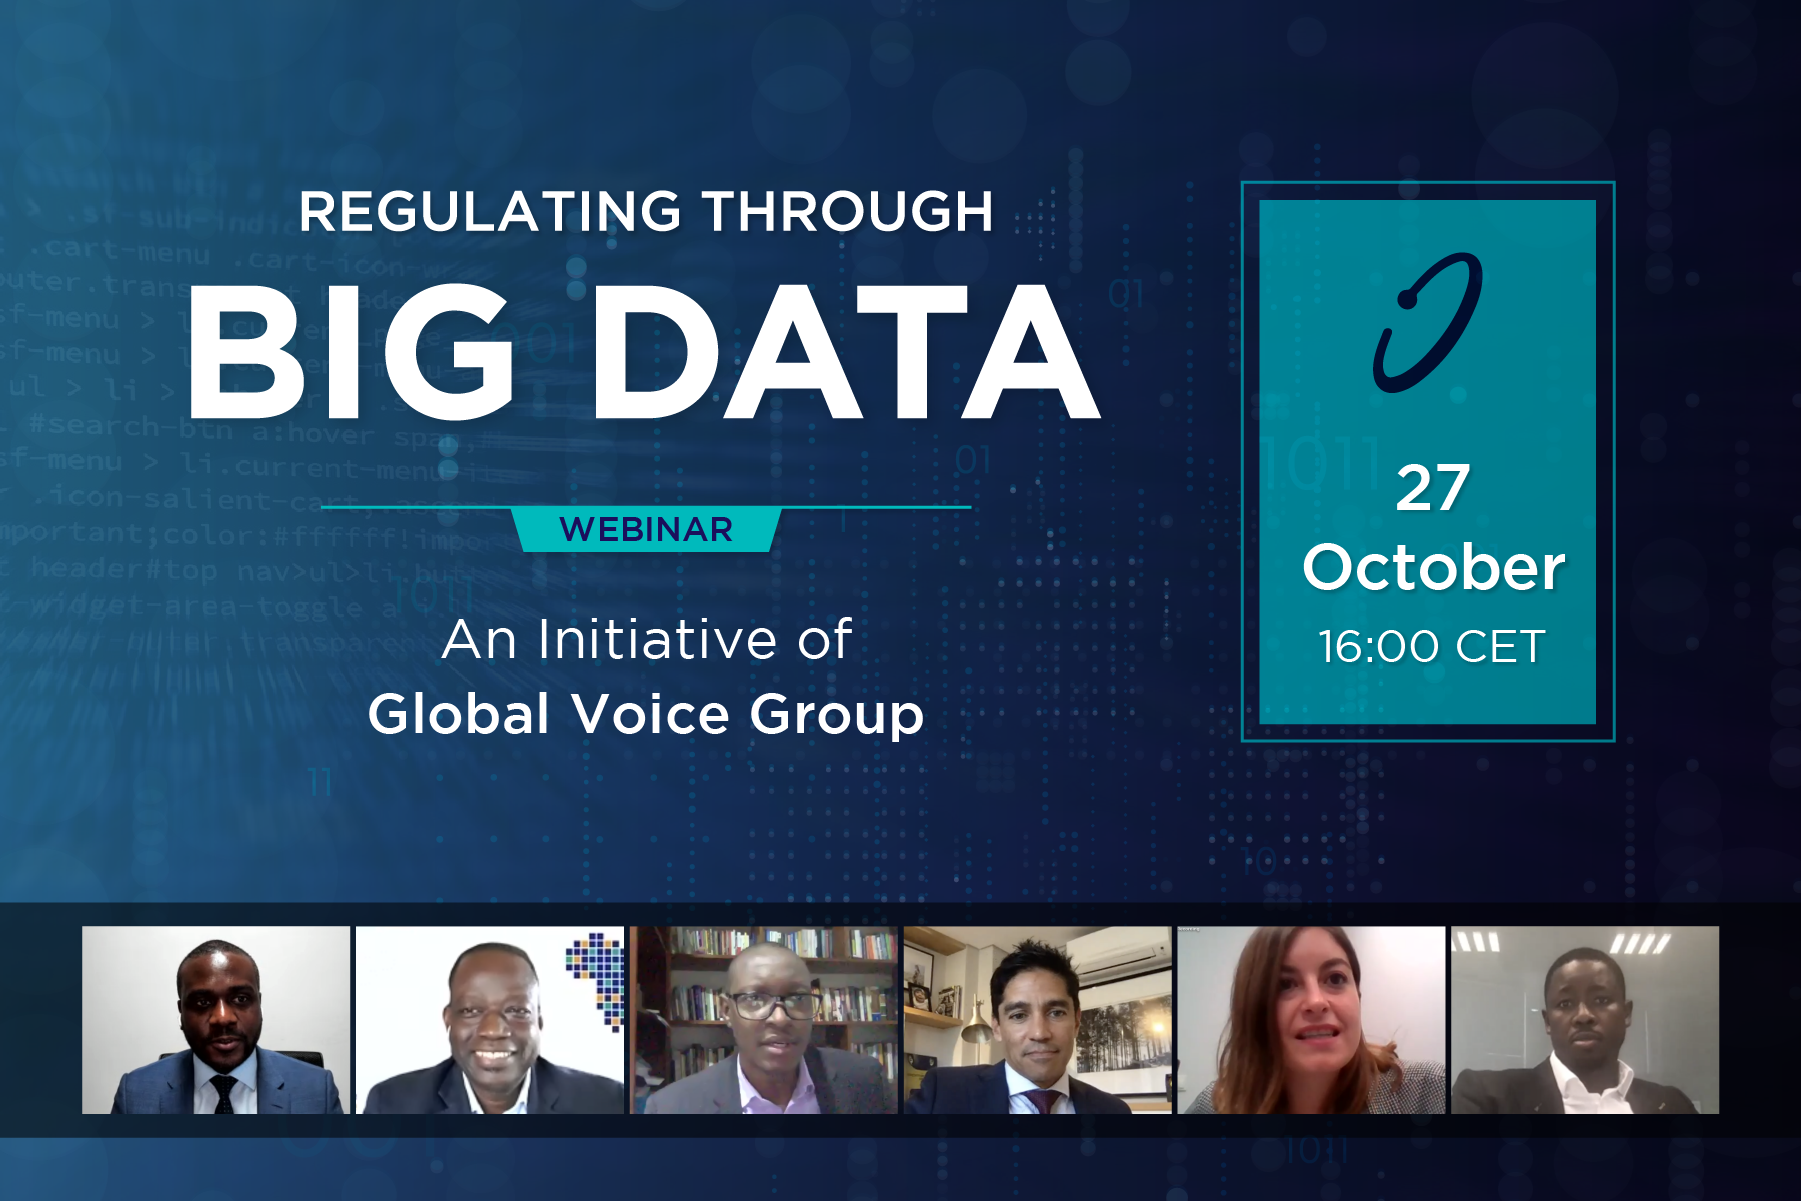 GVG's Regulating Through Big Data webinar